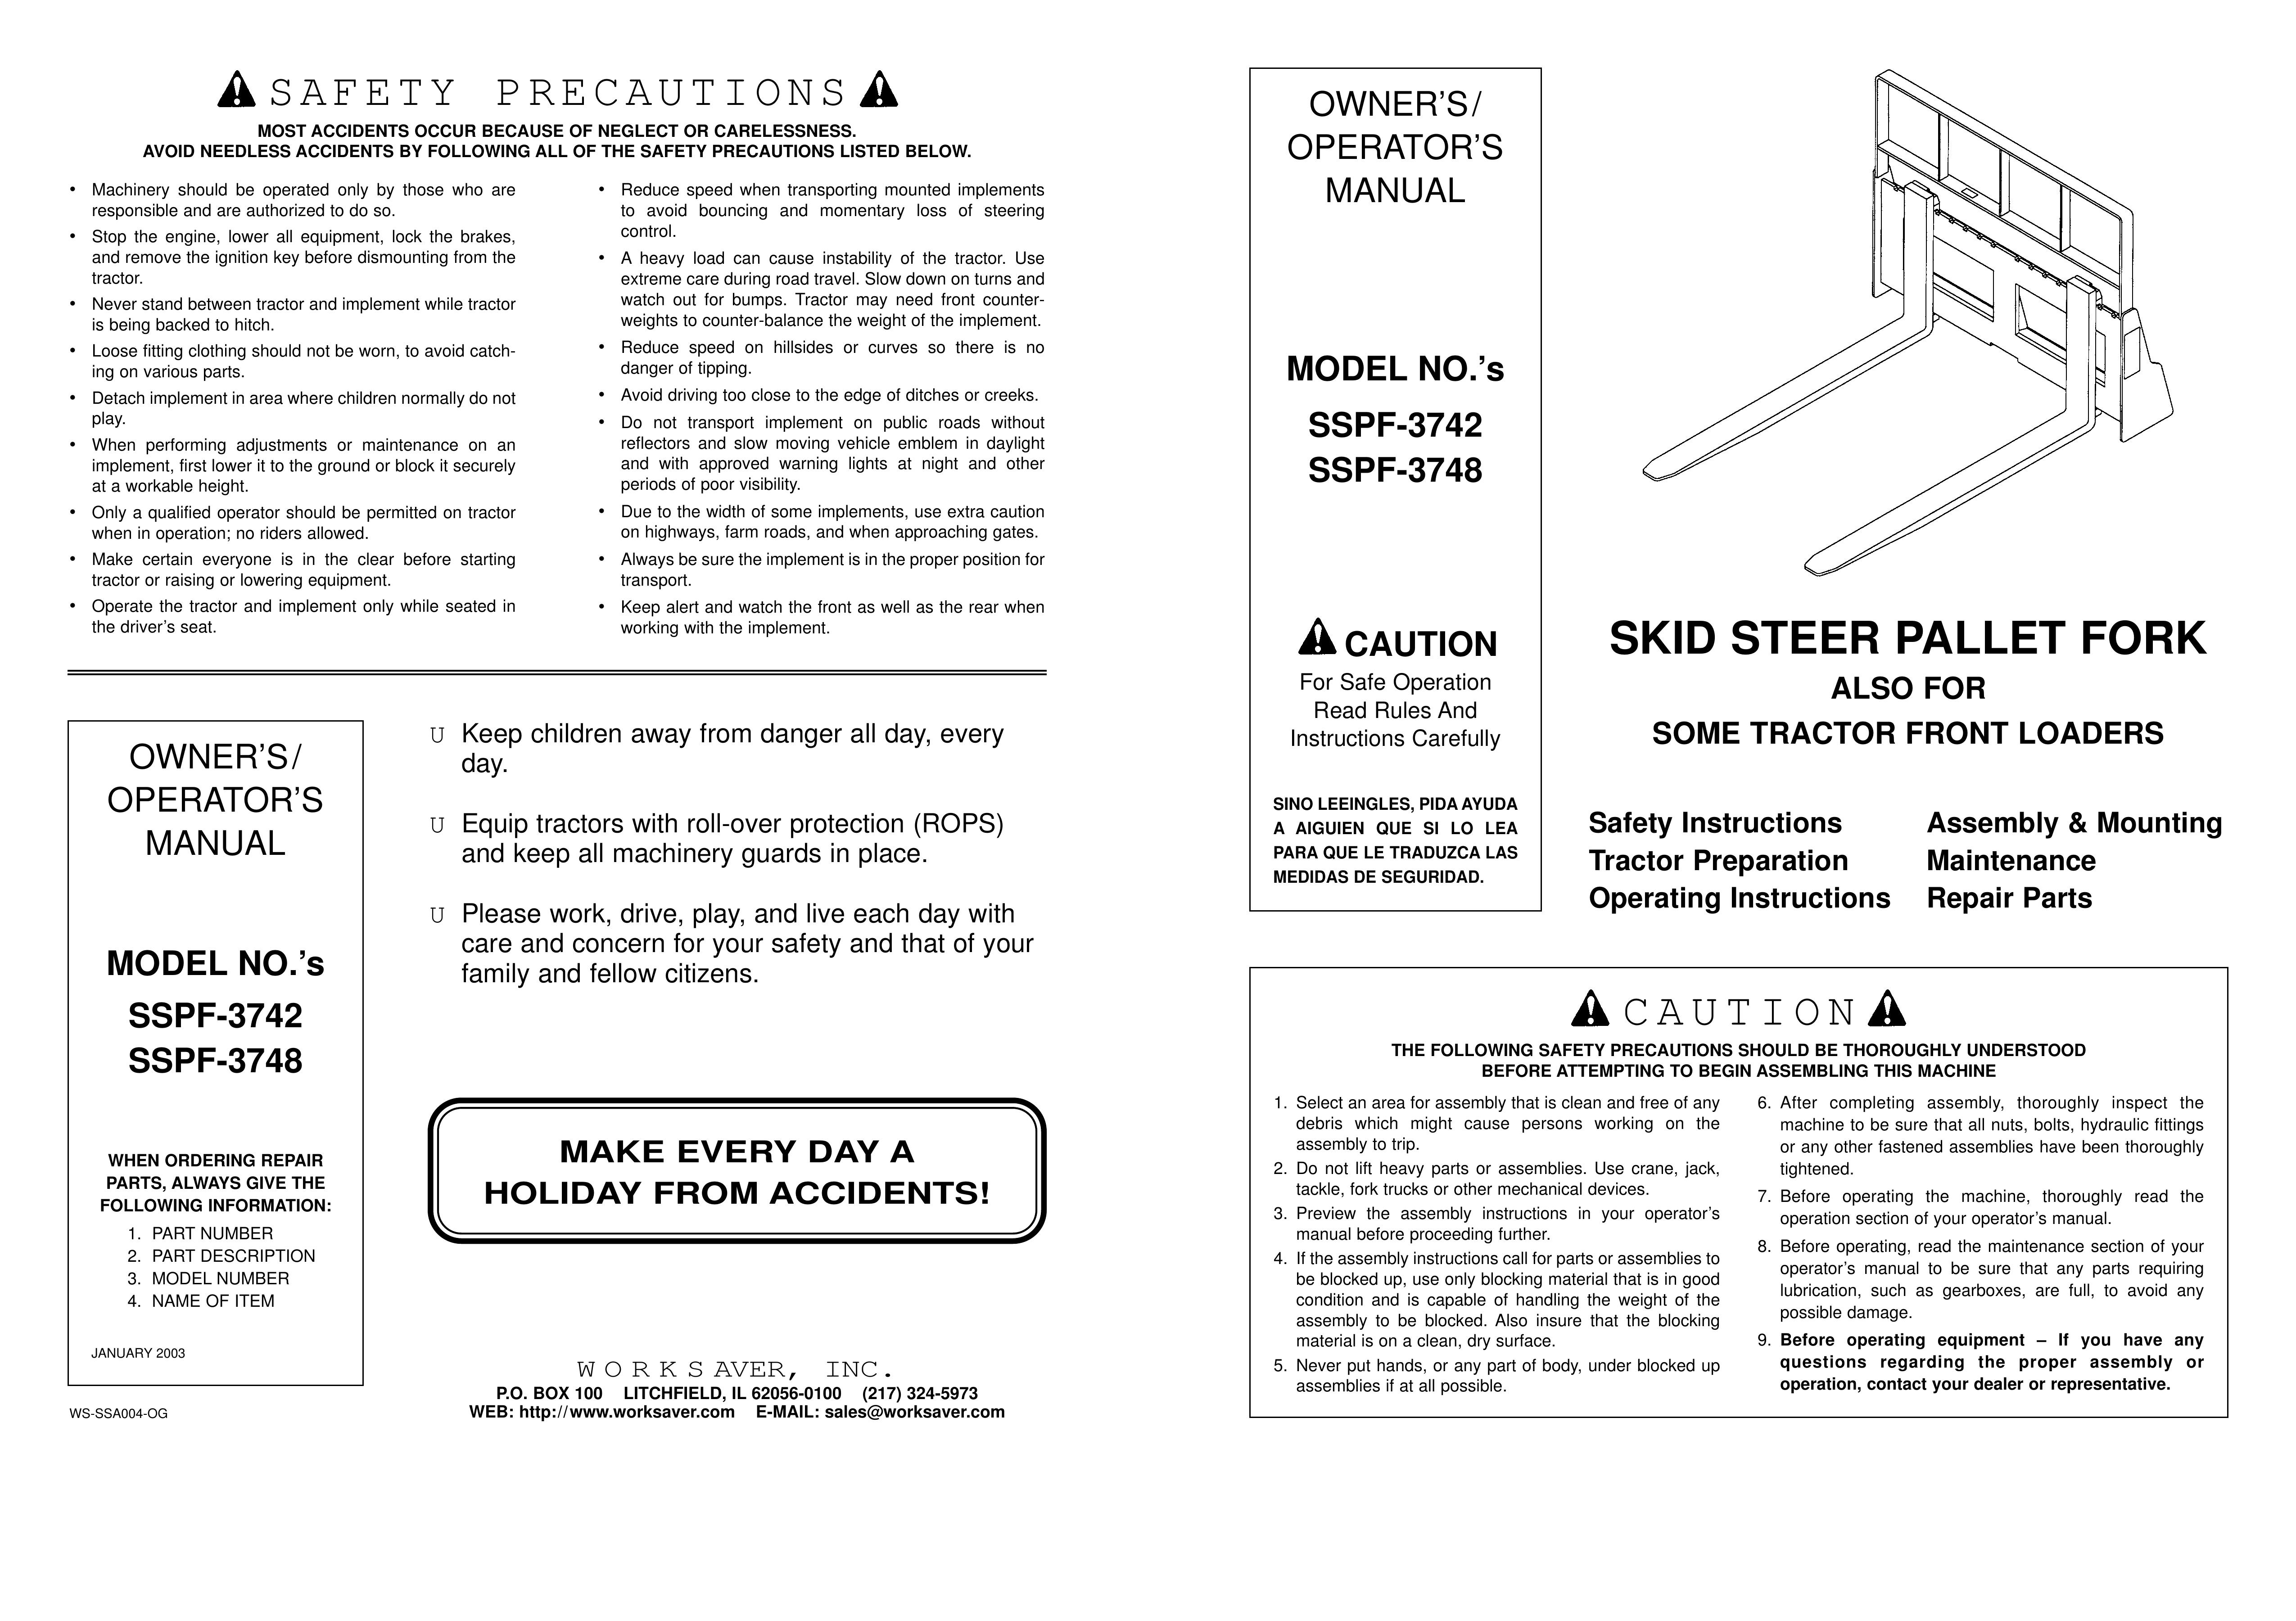 Worksaver SSPF-3742 Compact Loader User Manual